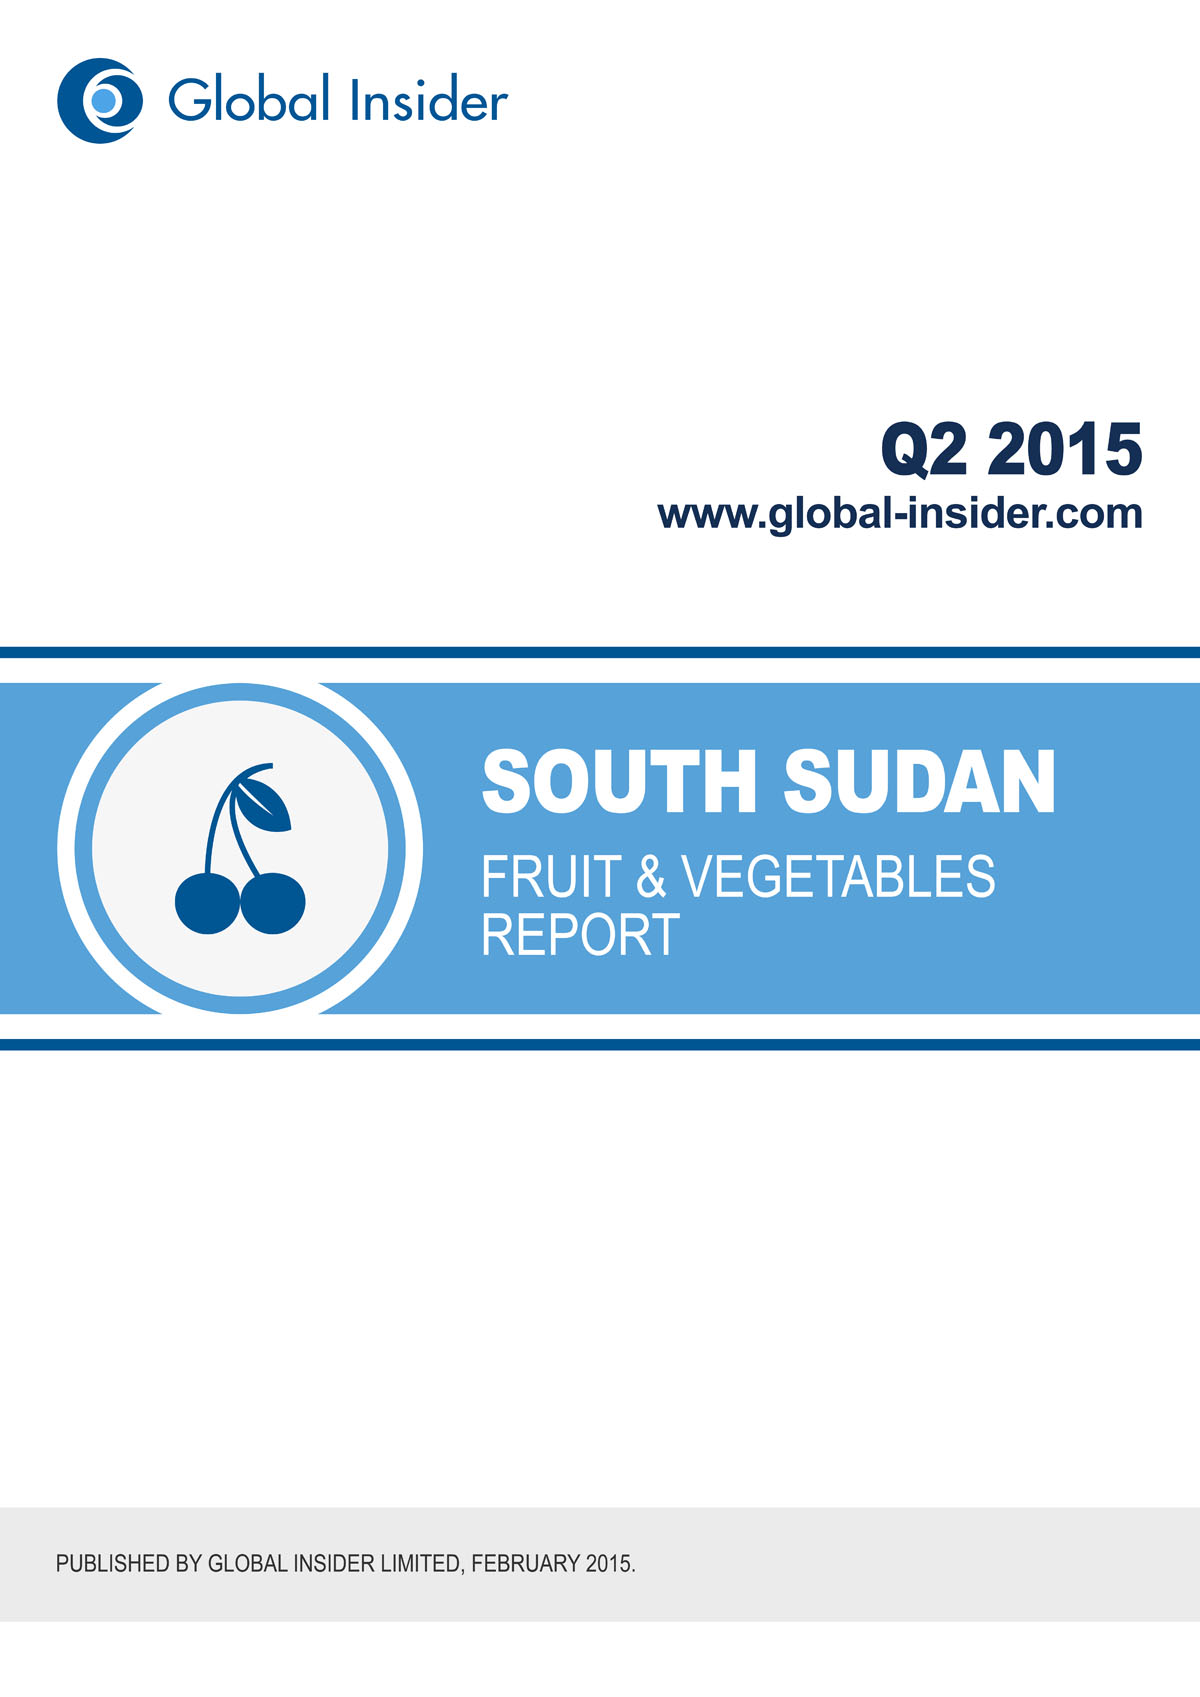 South Sudan Fruit & Vegetables Report